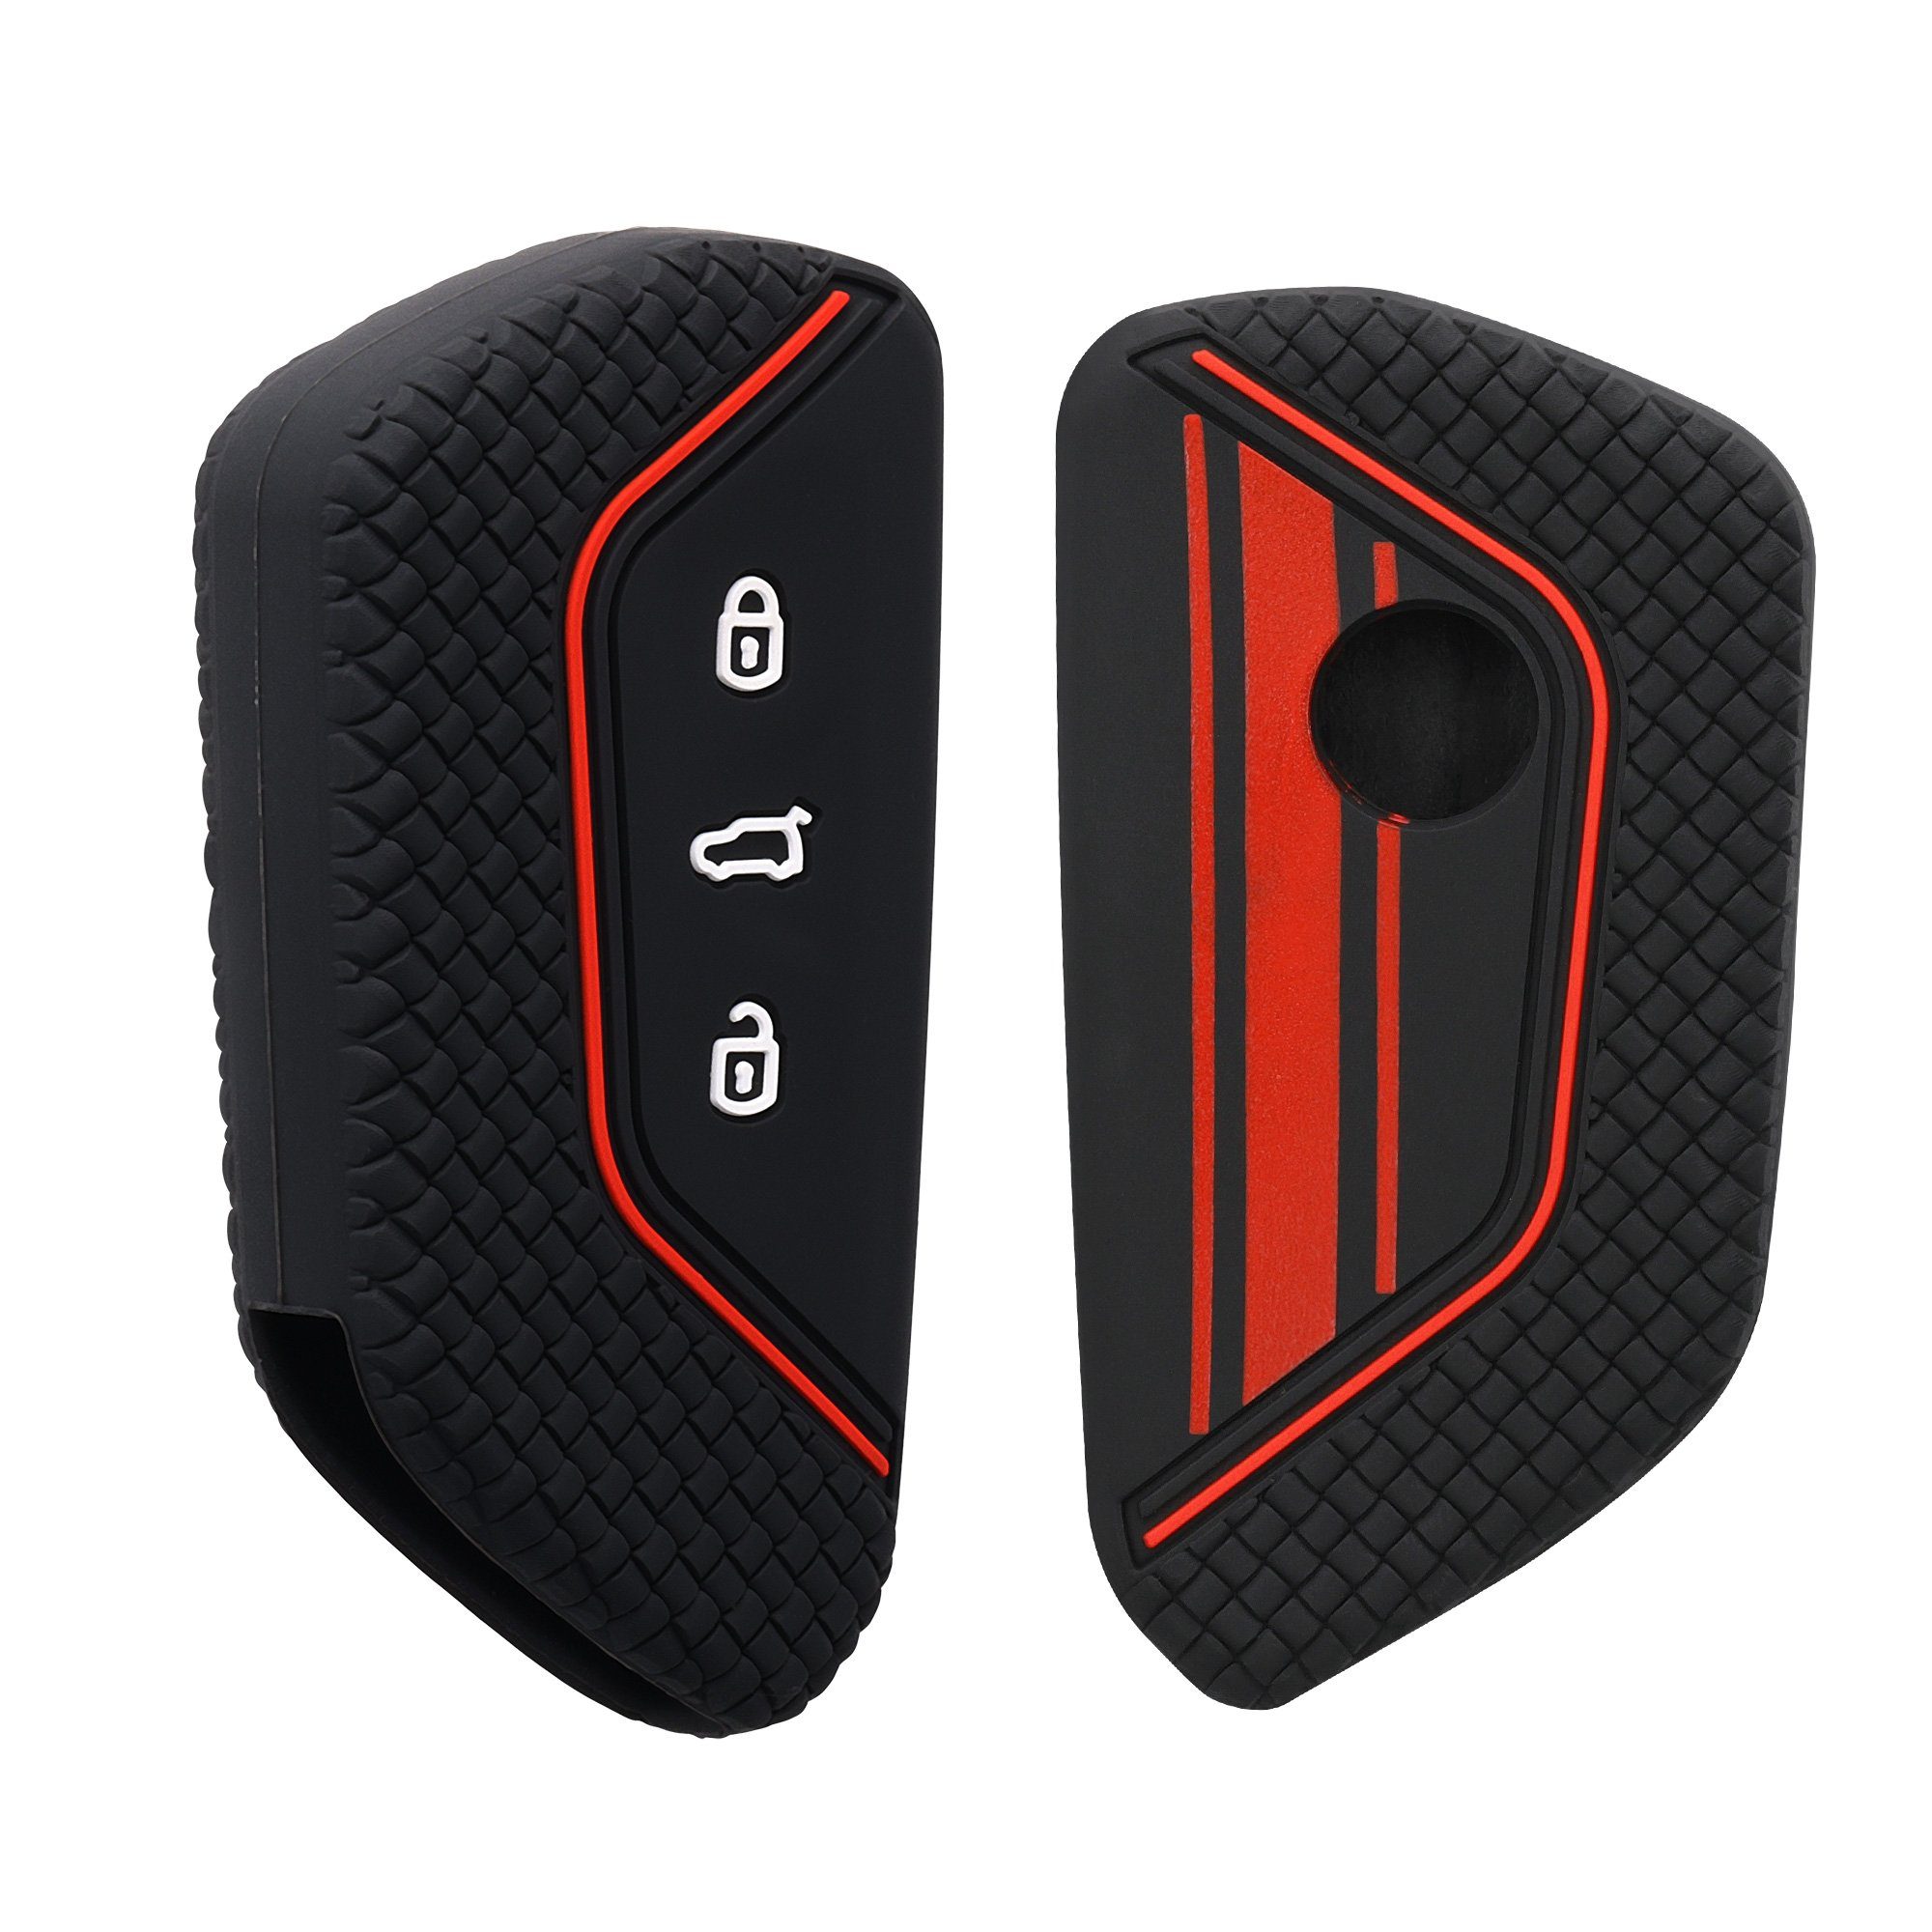 Autoschlüssel Schlüssel VW kwmobile 8, Cover Case Schlüsselhülle Hülle Schlüsseltasche für Rot Golf